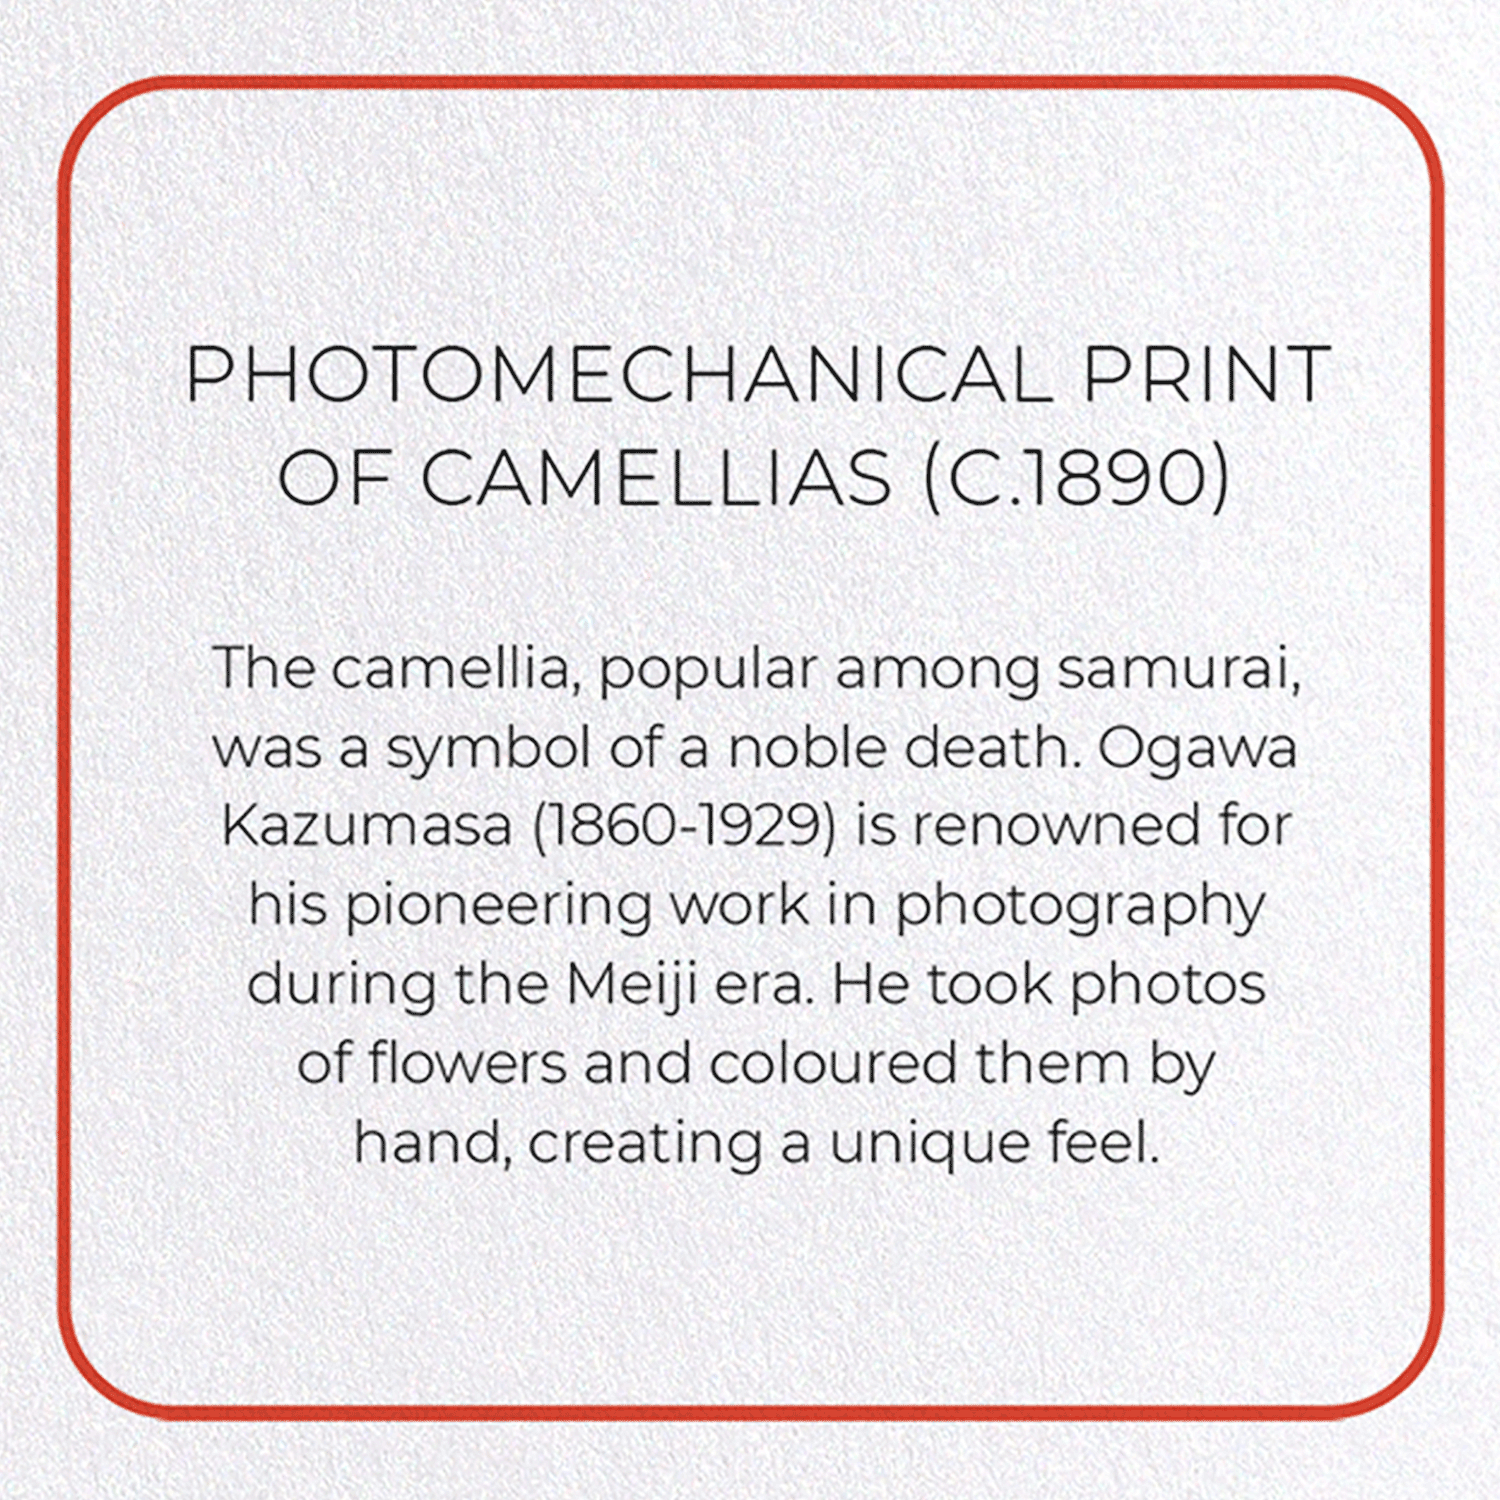 PHOTOMECHANICAL PRINT OF CAMELLIAS (C.1890)